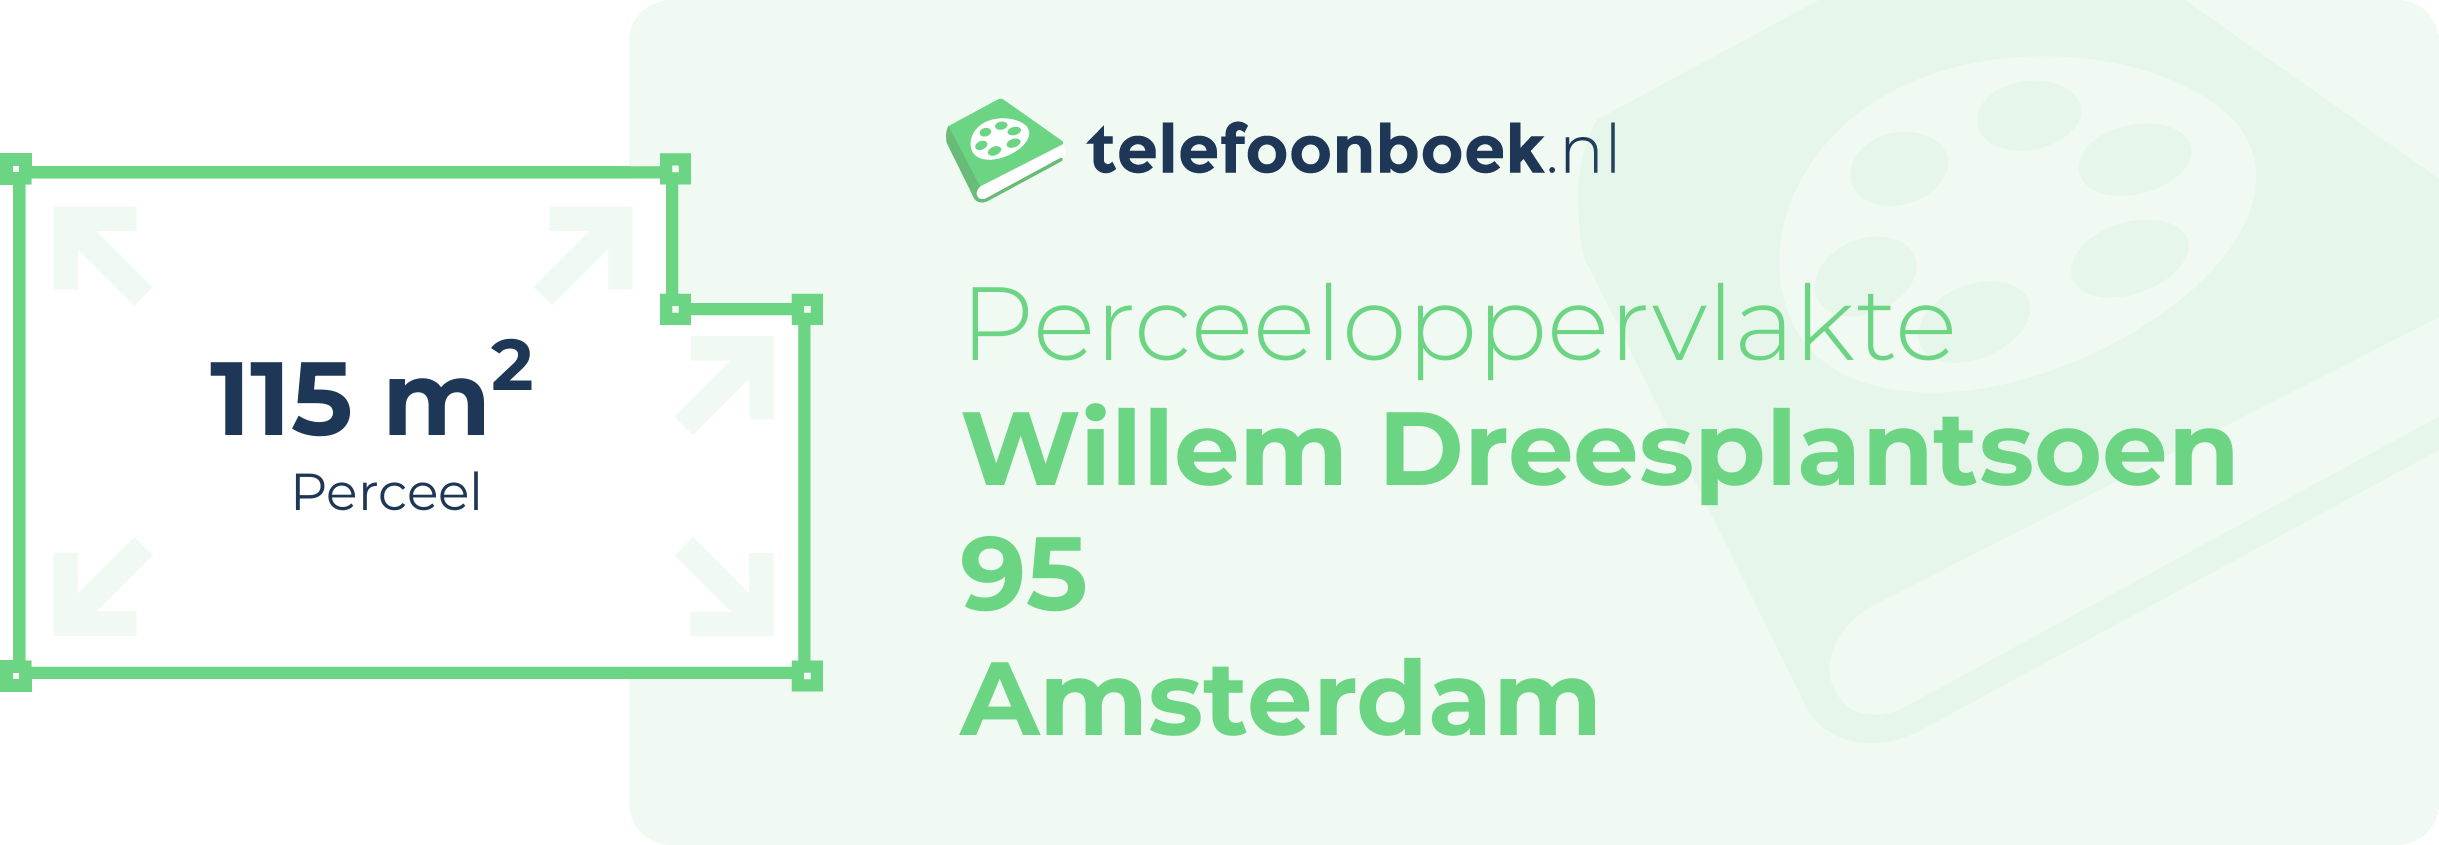 Perceeloppervlakte Willem Dreesplantsoen 95 Amsterdam